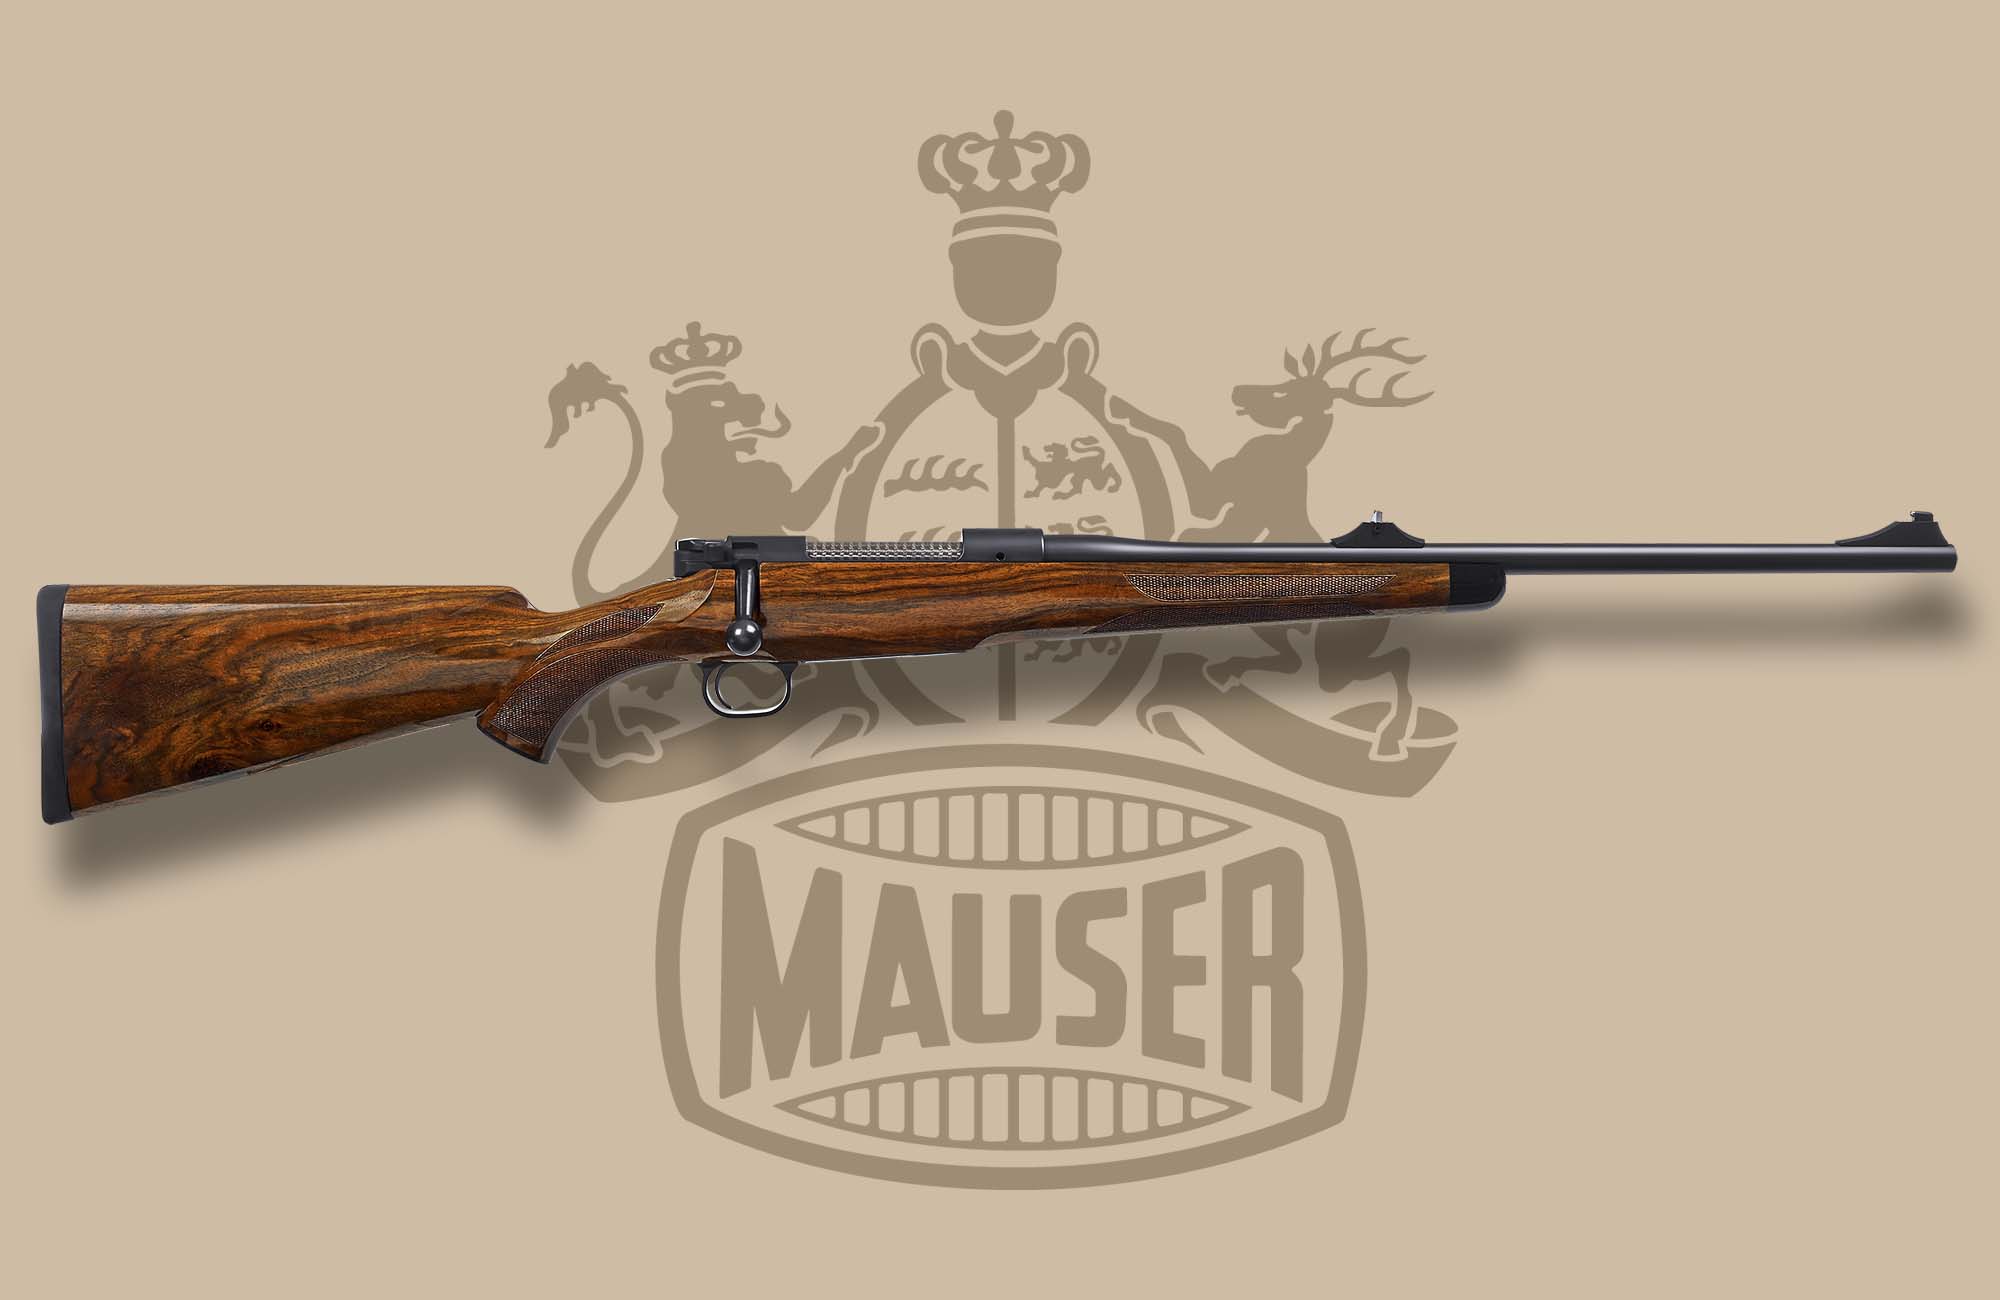 Mauser Logo - Mauser M12 S Manual Cocking system rifle